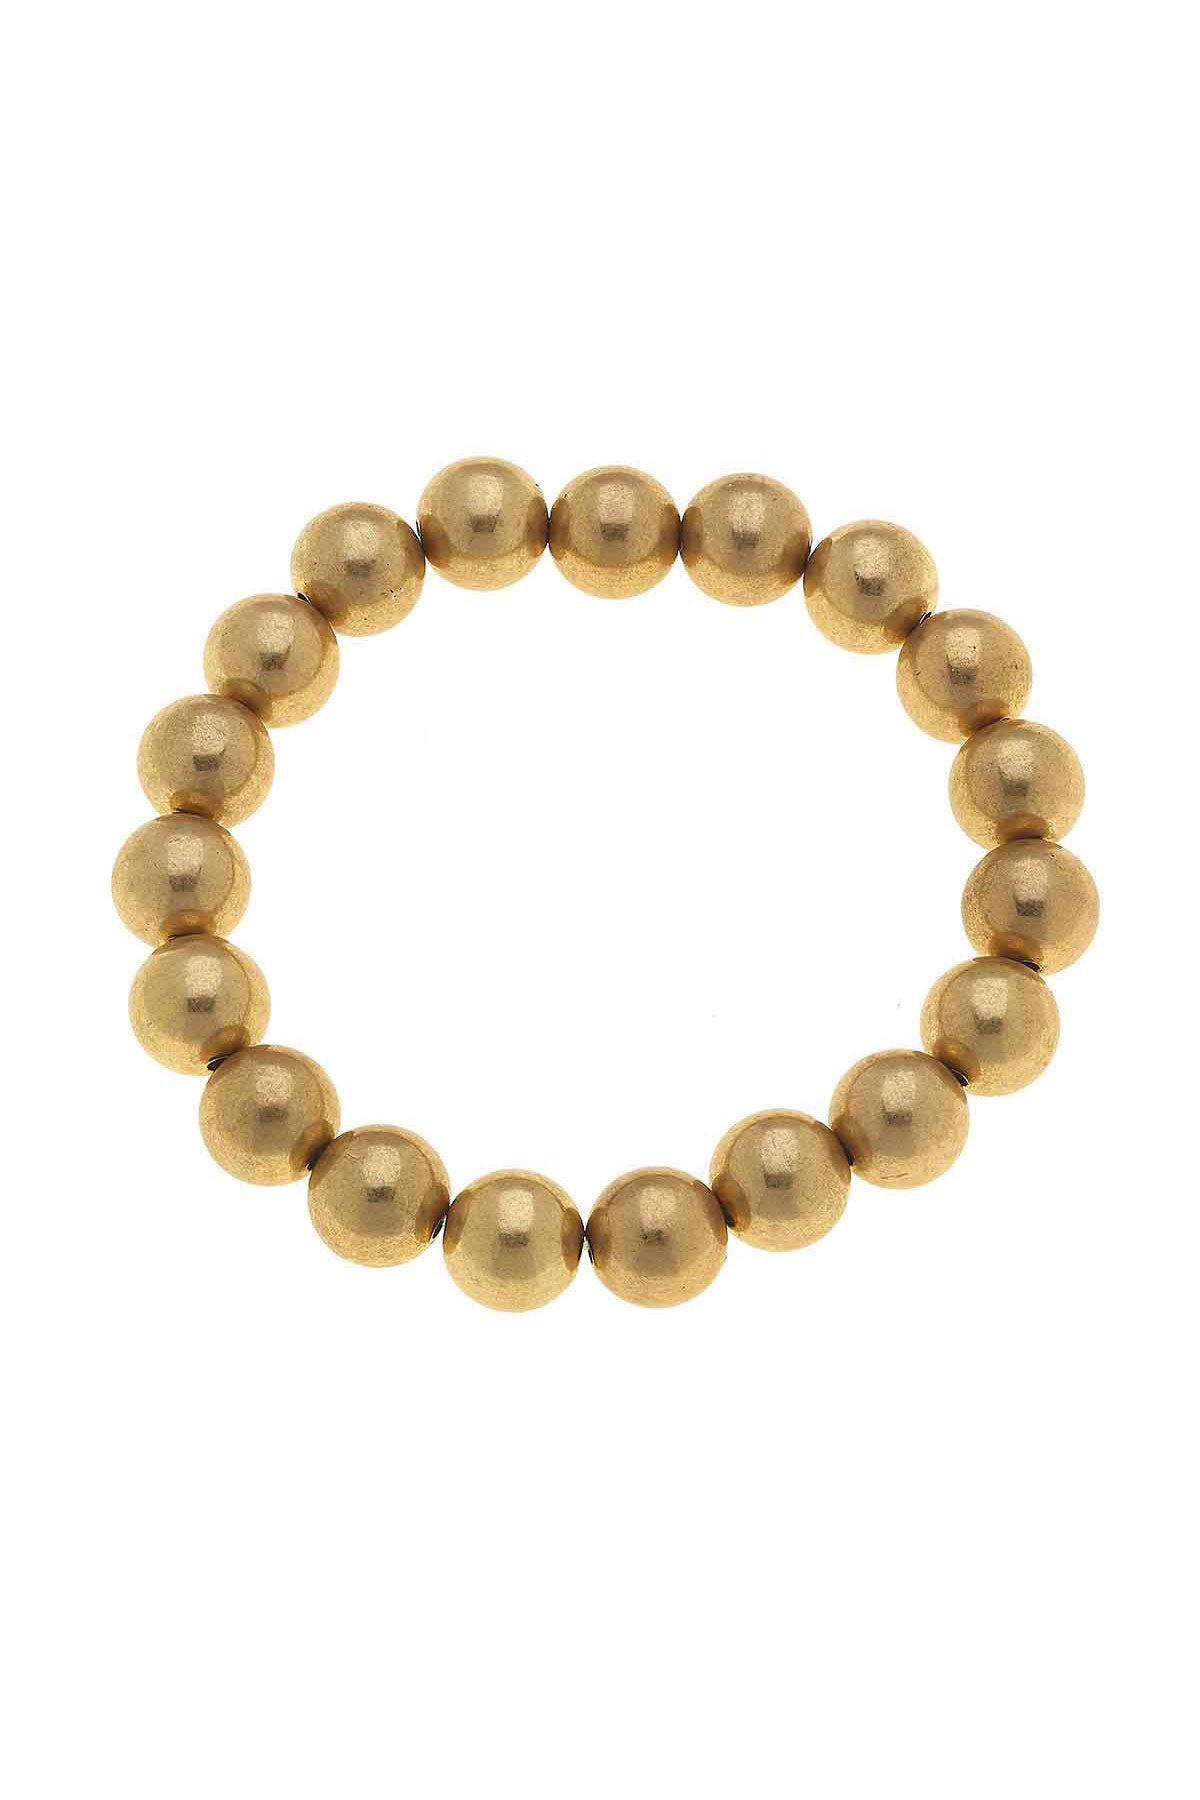 Chloe 10MM Ball Bead Stretch Bracelet in Worn Gold